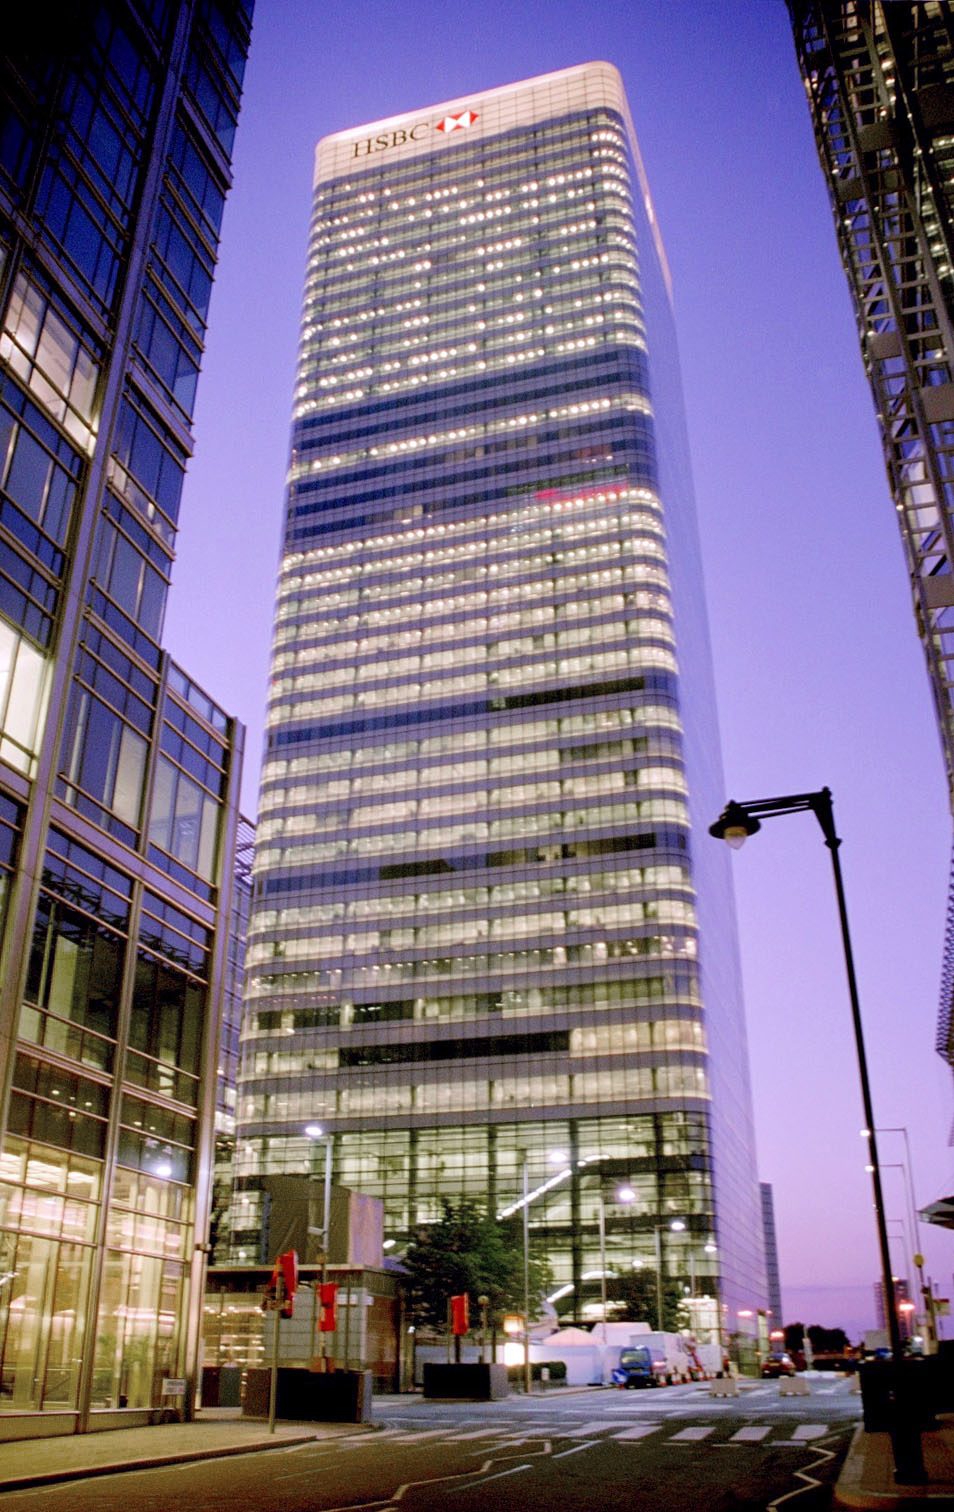 HSBC Tower, London - Night view from Upper Bank Street. © Mathias Beinling